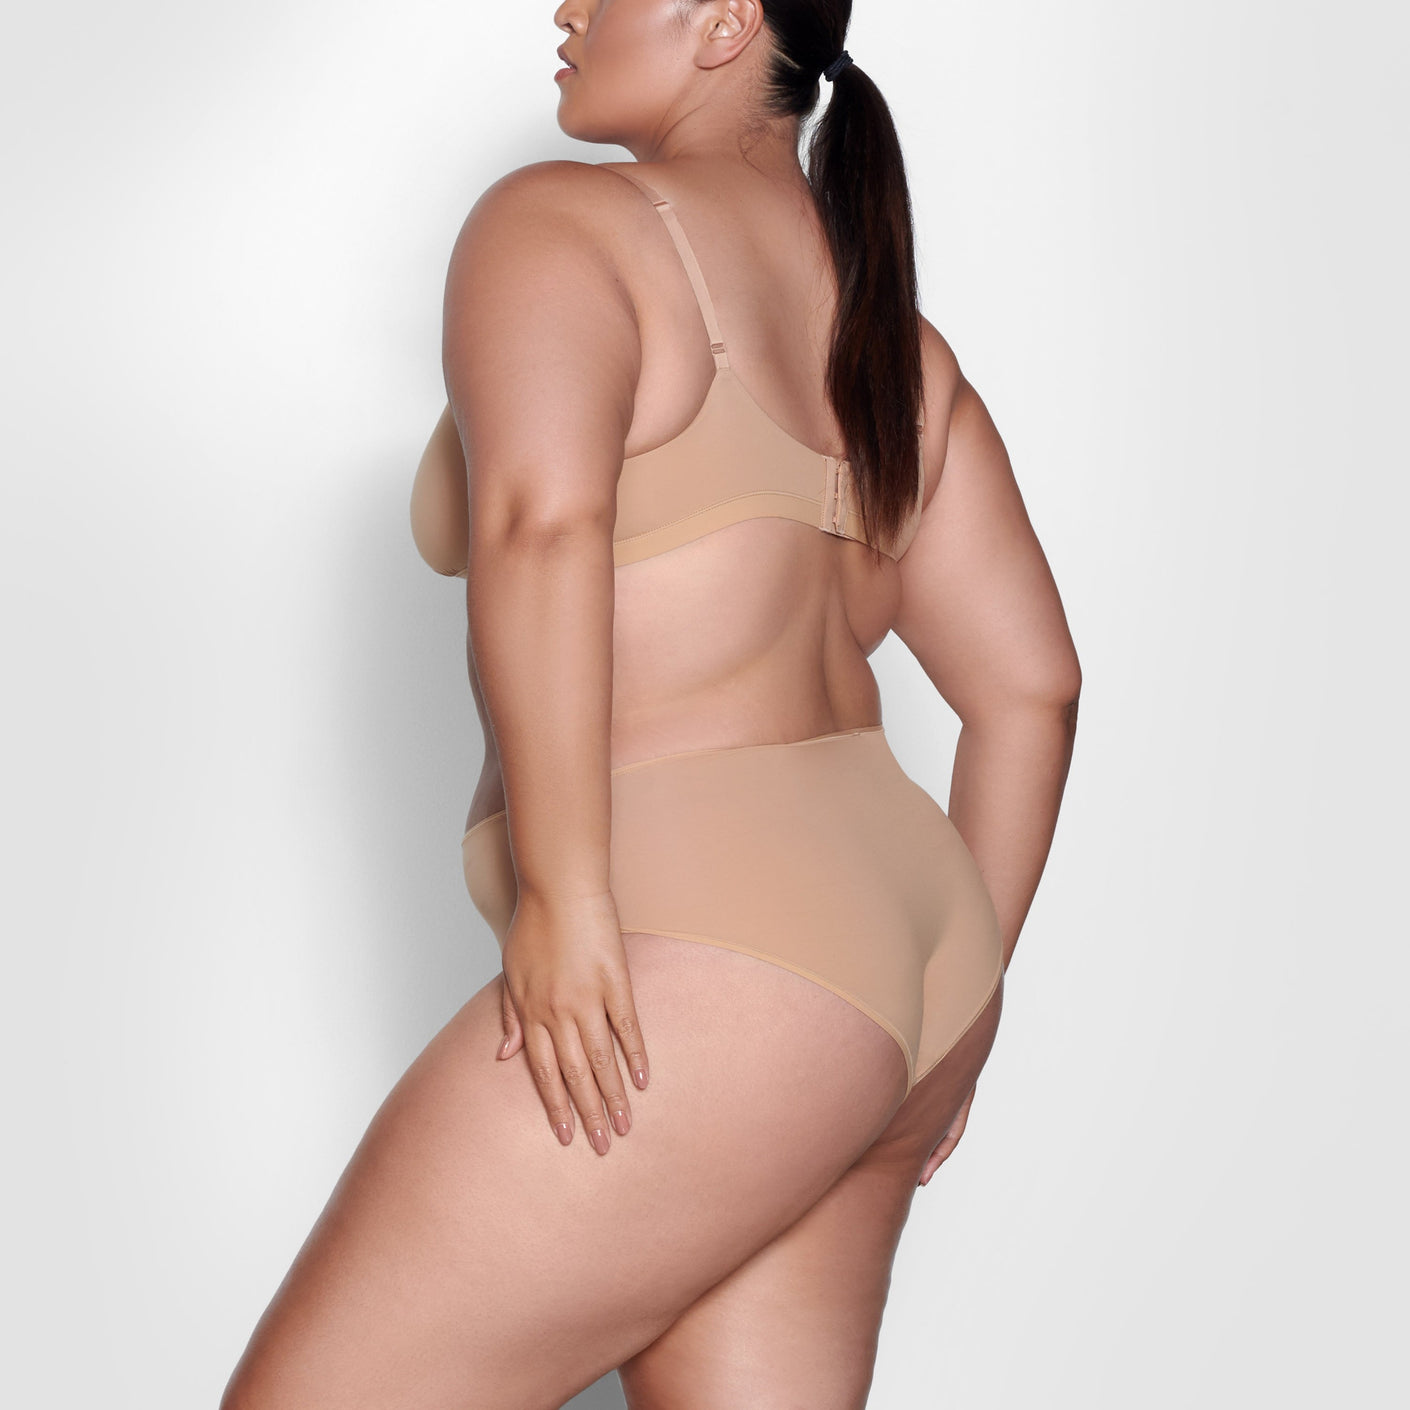 Underwear label Nala is the diverse brand taking over Skims in